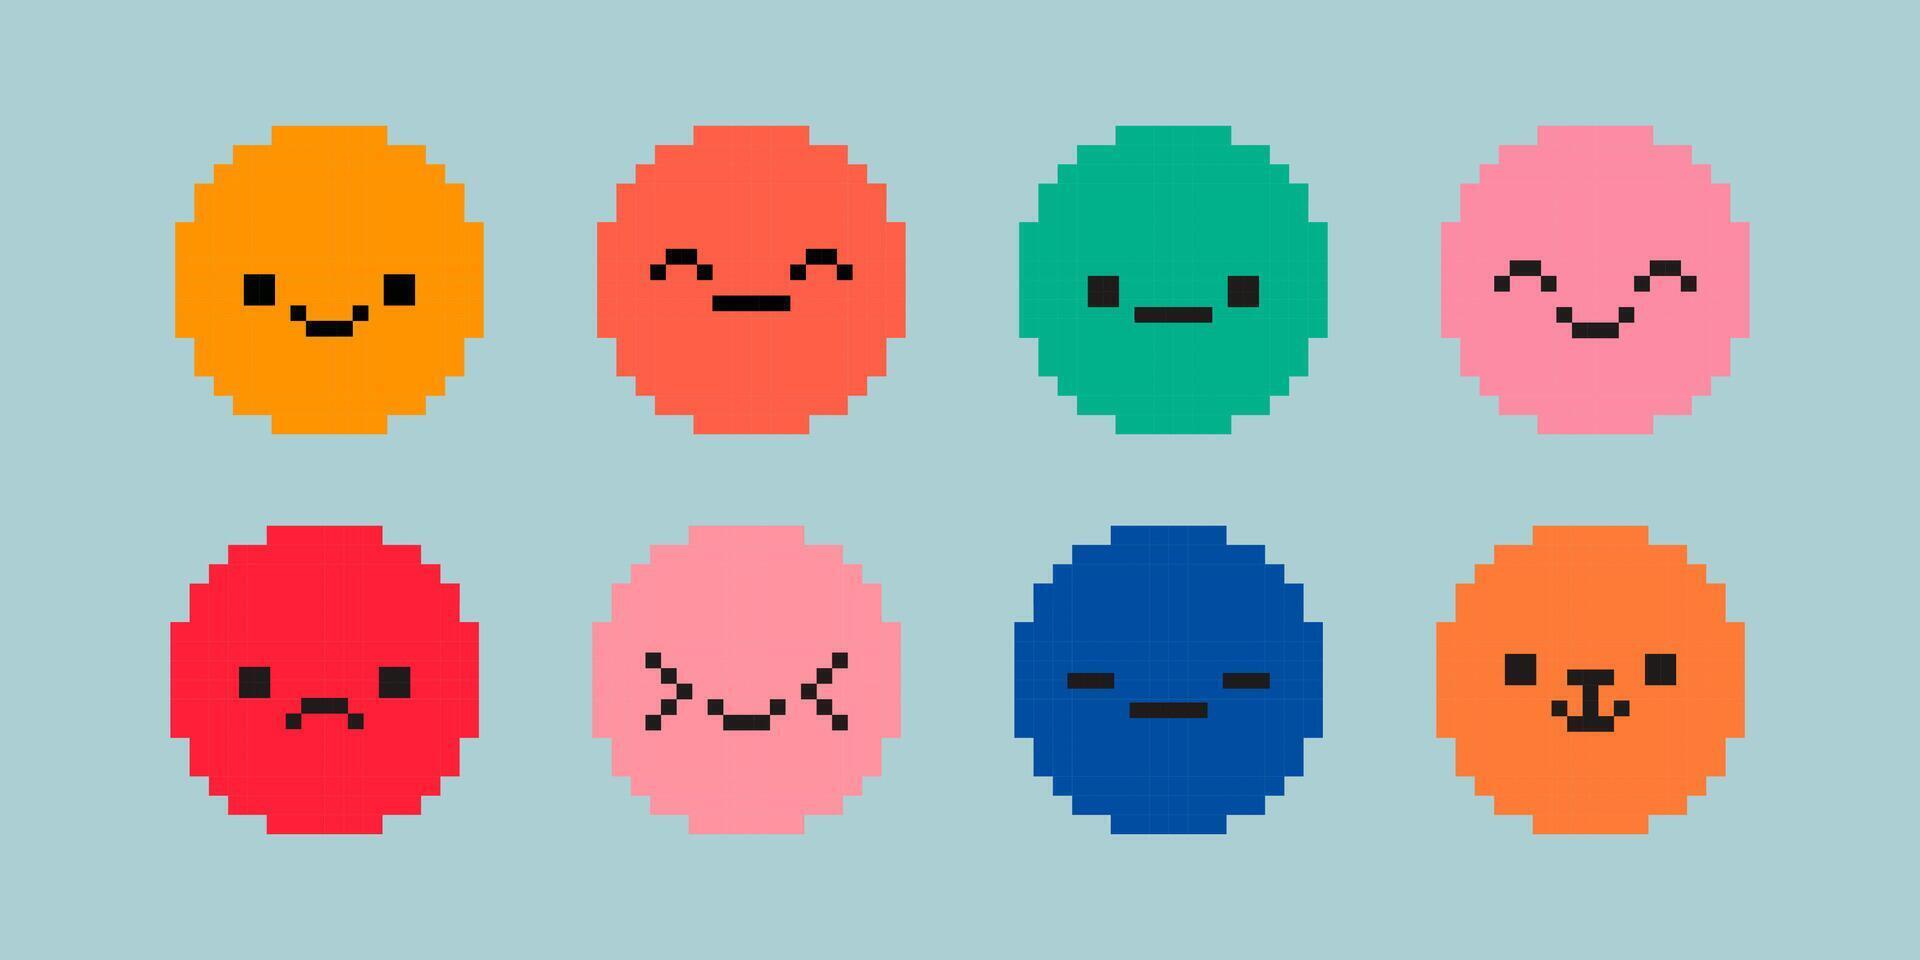 pixel face definir. vários pixel arte rostos, feliz e triste. 8 bits ácido estilo pixelizada face. vetor